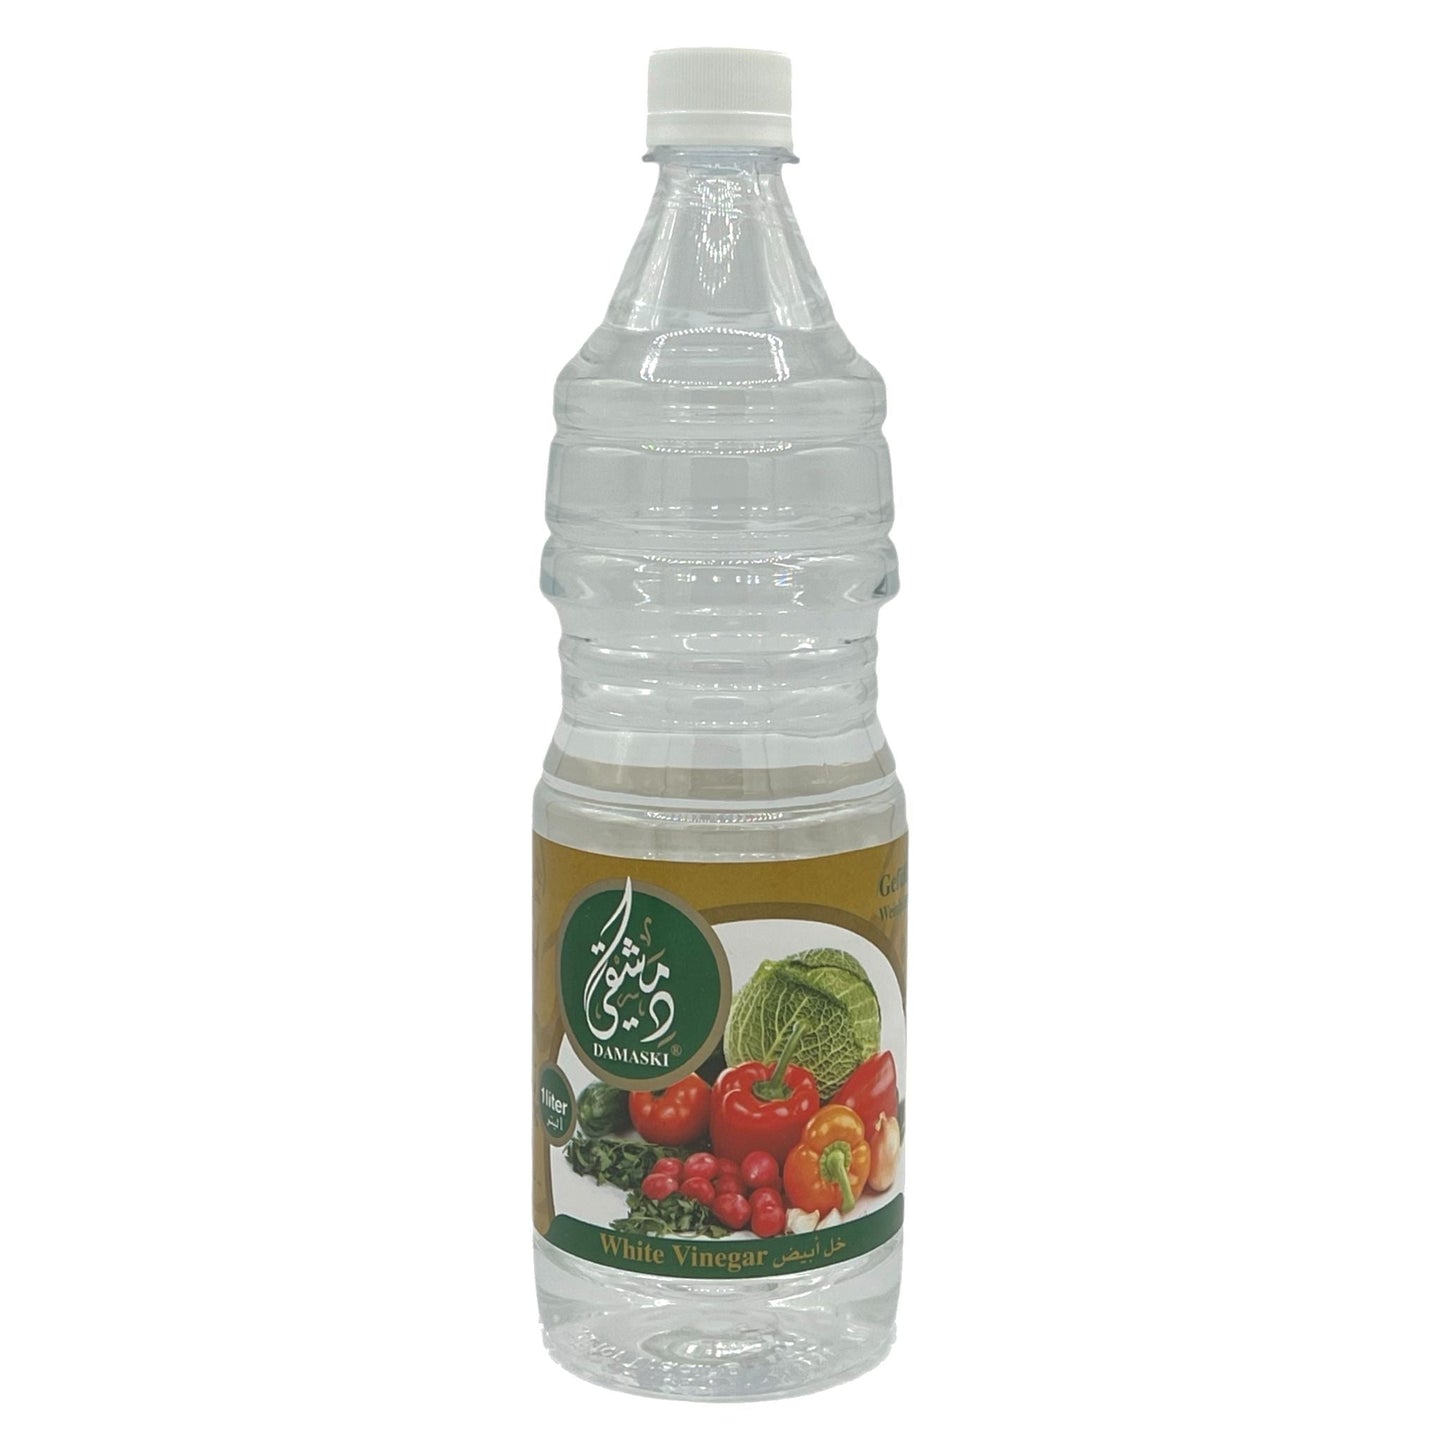 Damaski White Vinegar 1 Liter